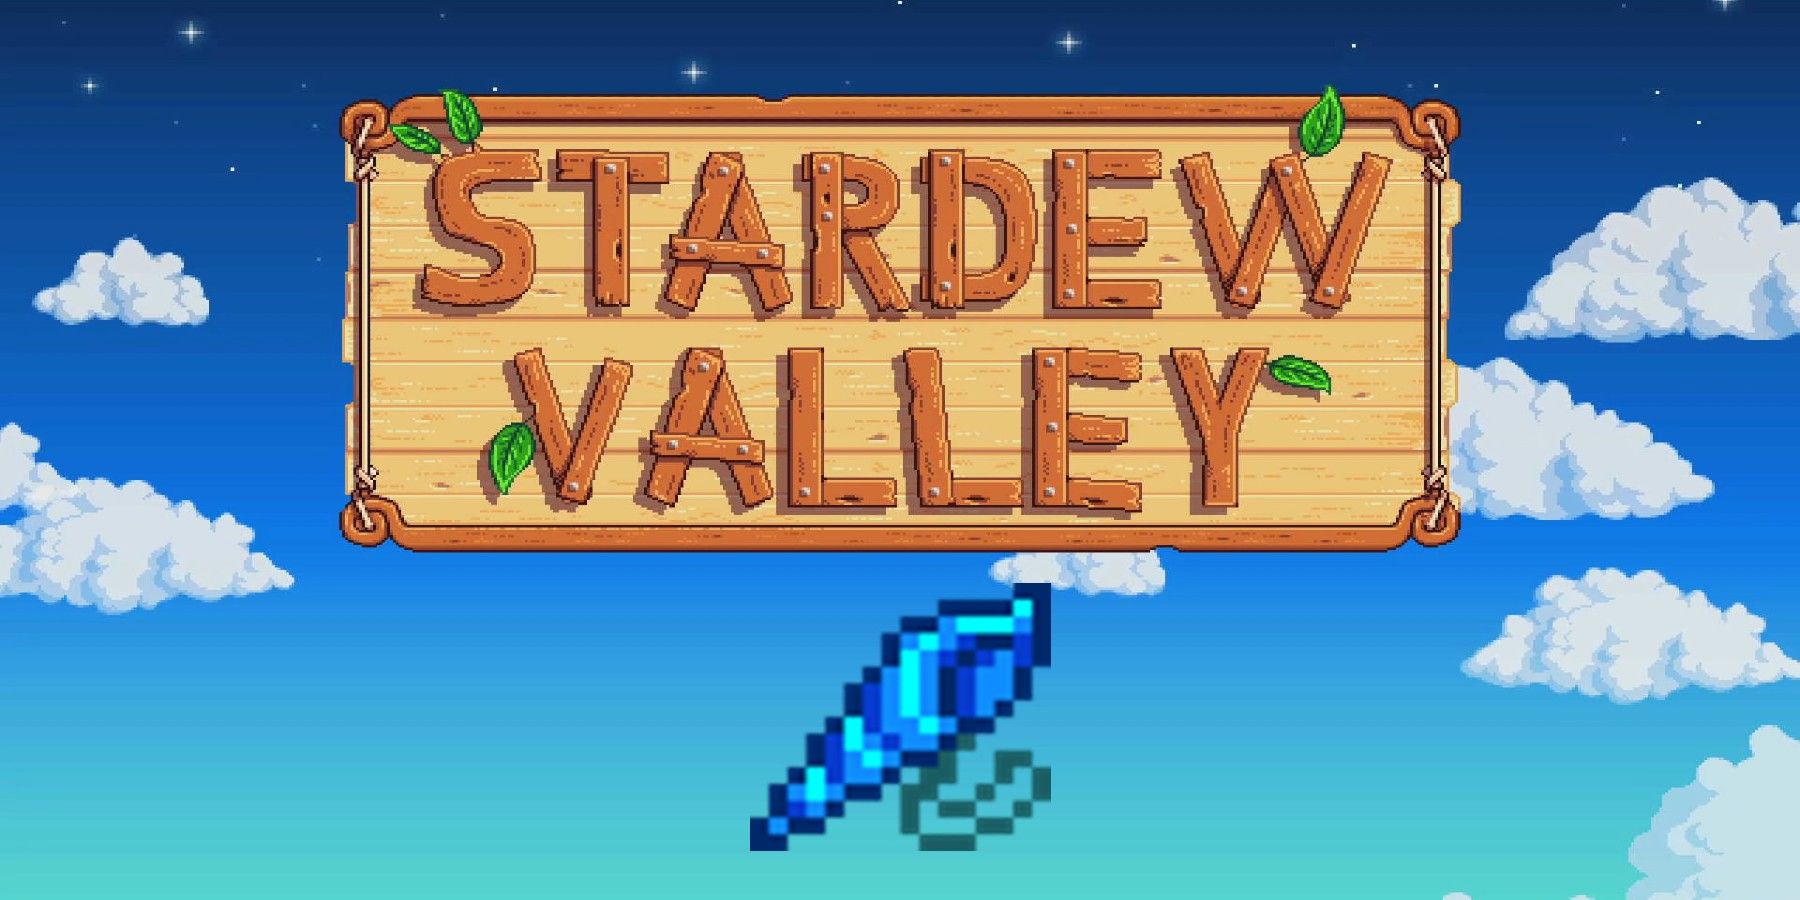 stardew valley logo and mermaid pendant